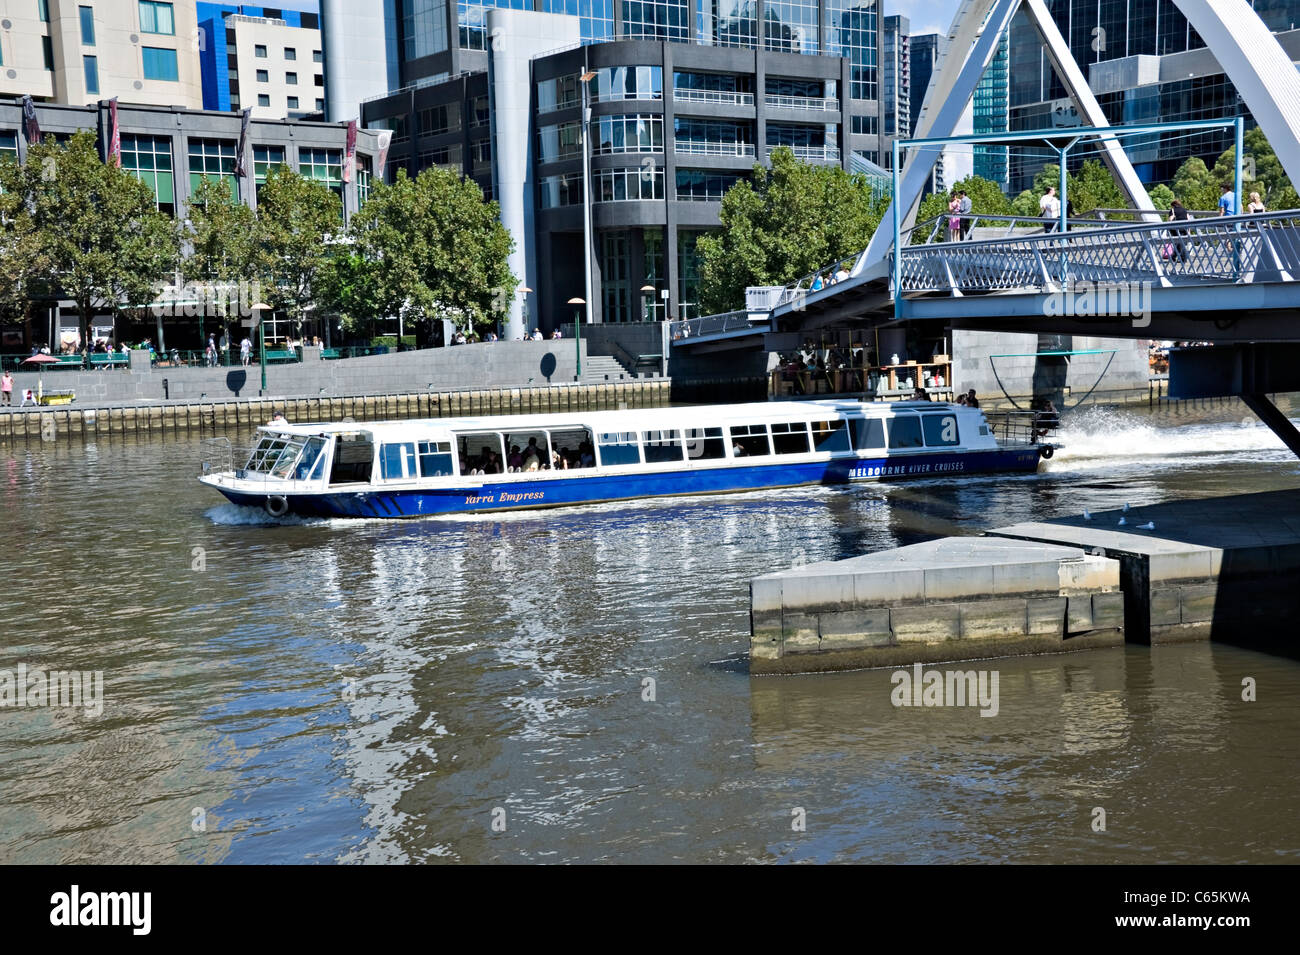 A Tourist Boat River Cruise Craft Passes Under The Yarra River Footbridge in Melbourne Victoria Australia Stock Photo